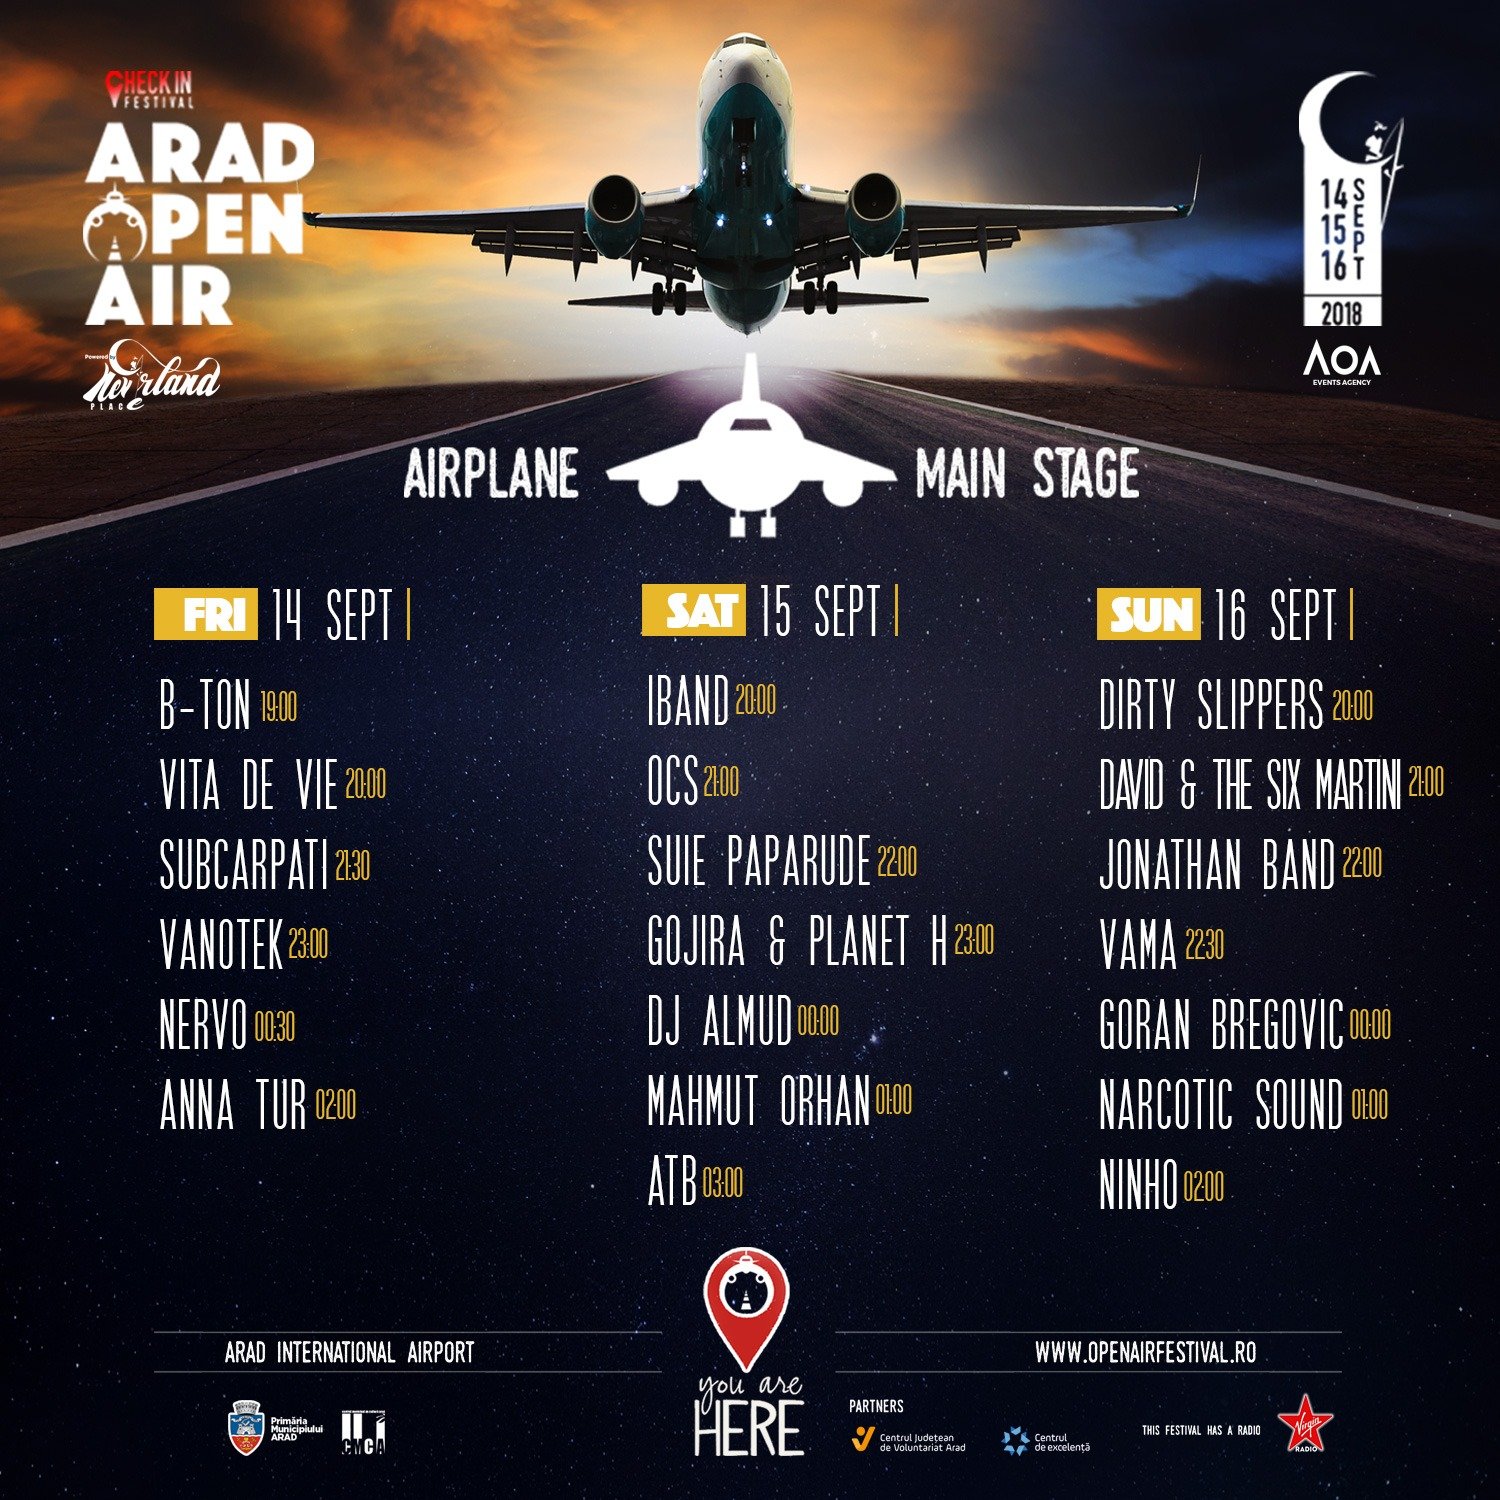 Arad Open Air Festival program